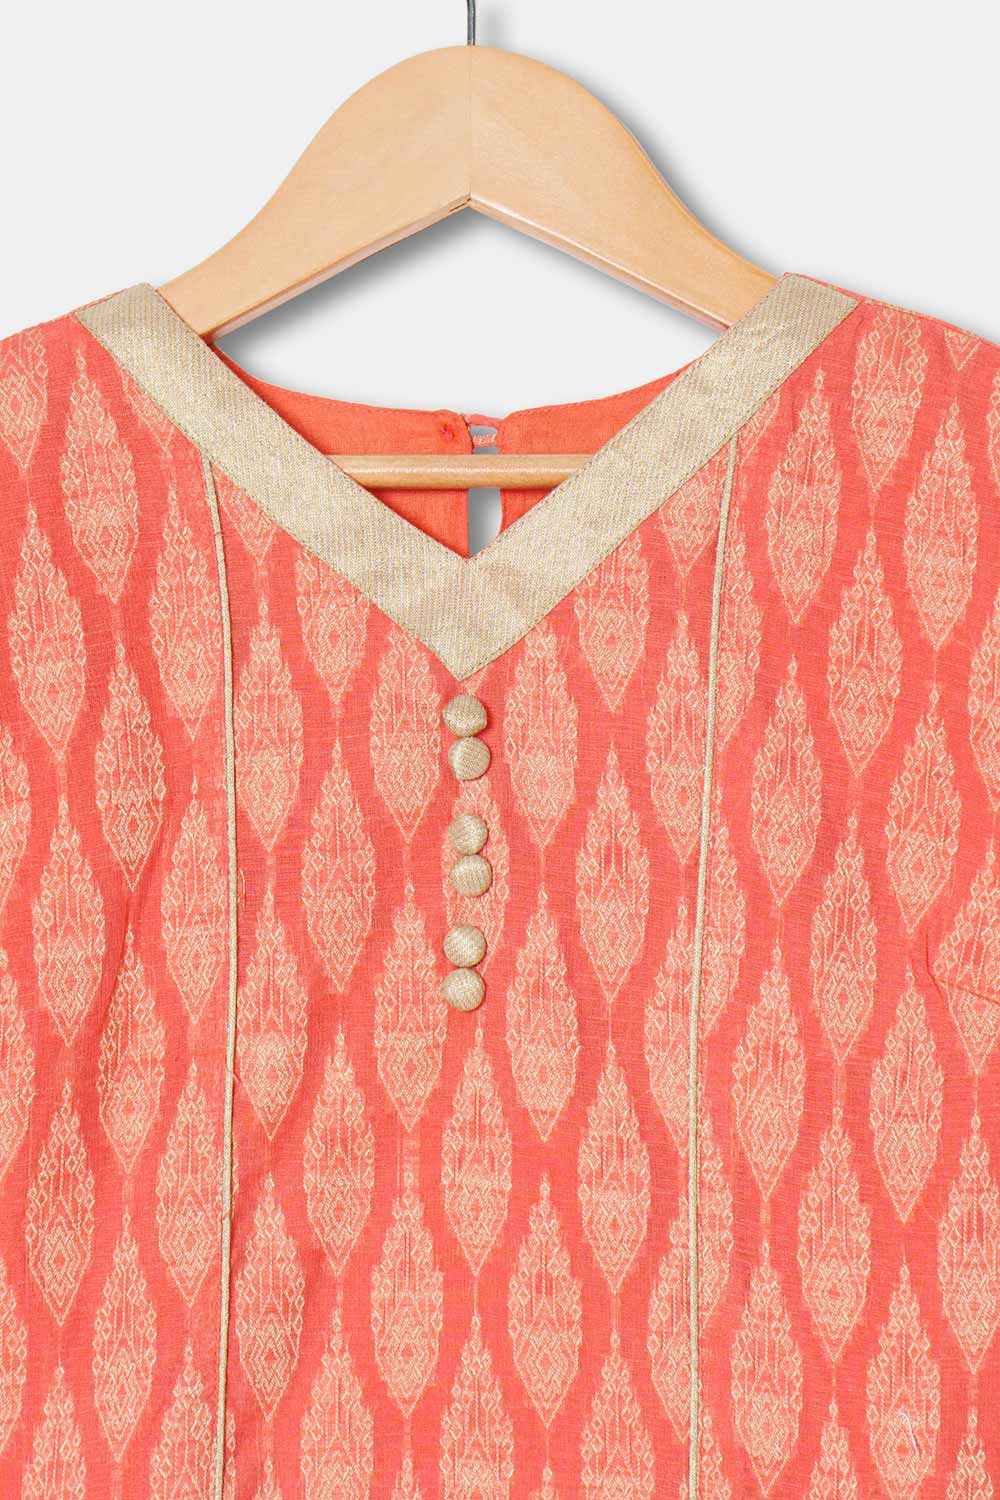 Chittythalli Girls Kurthi Handloom Cotton Regular Fit  - Orange - KU06